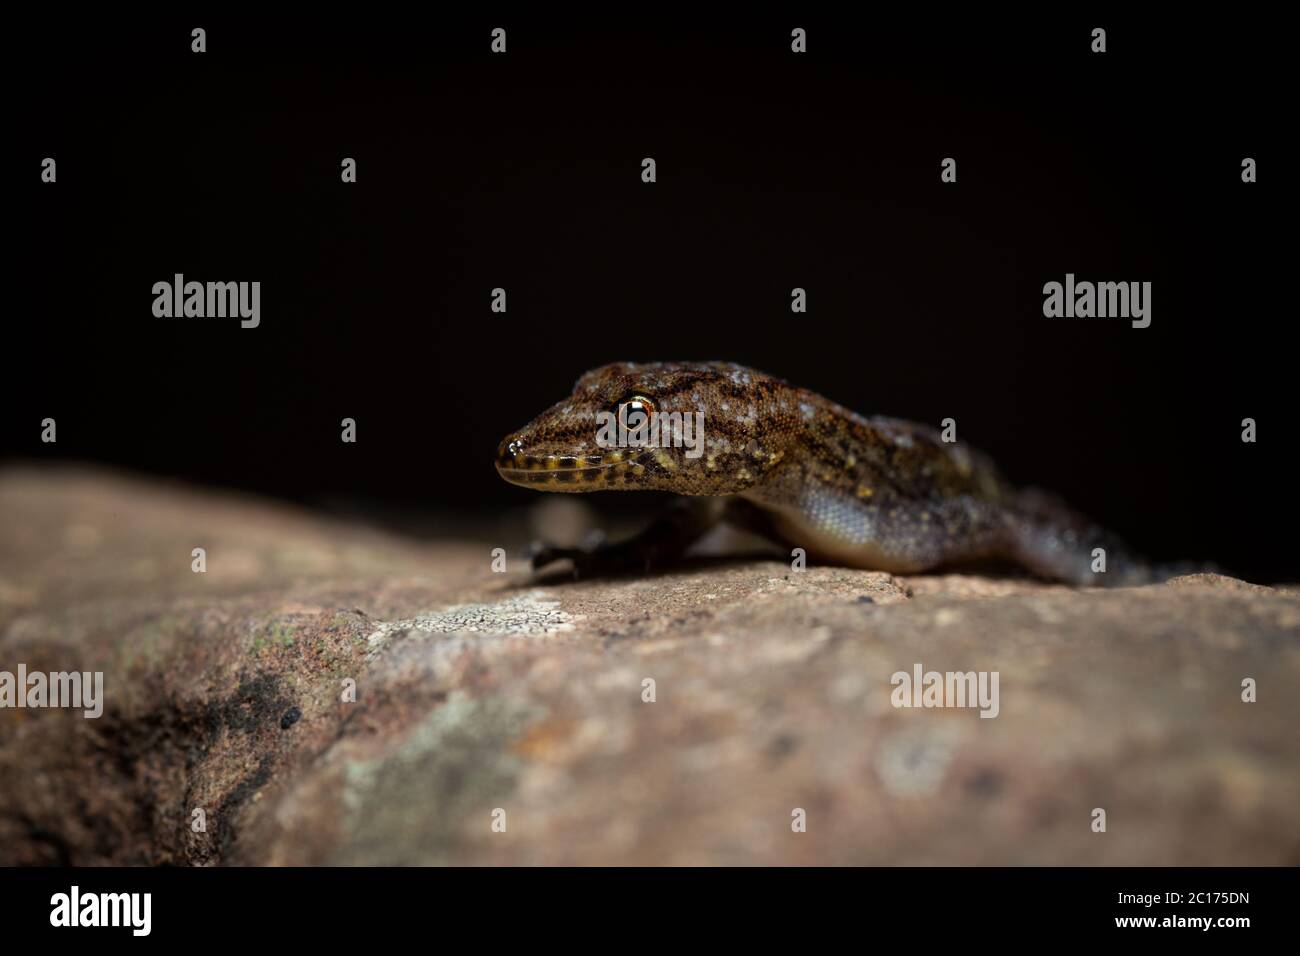 Cnemaspis girii gecko, Kaas, Maharashtra, India Foto de stock